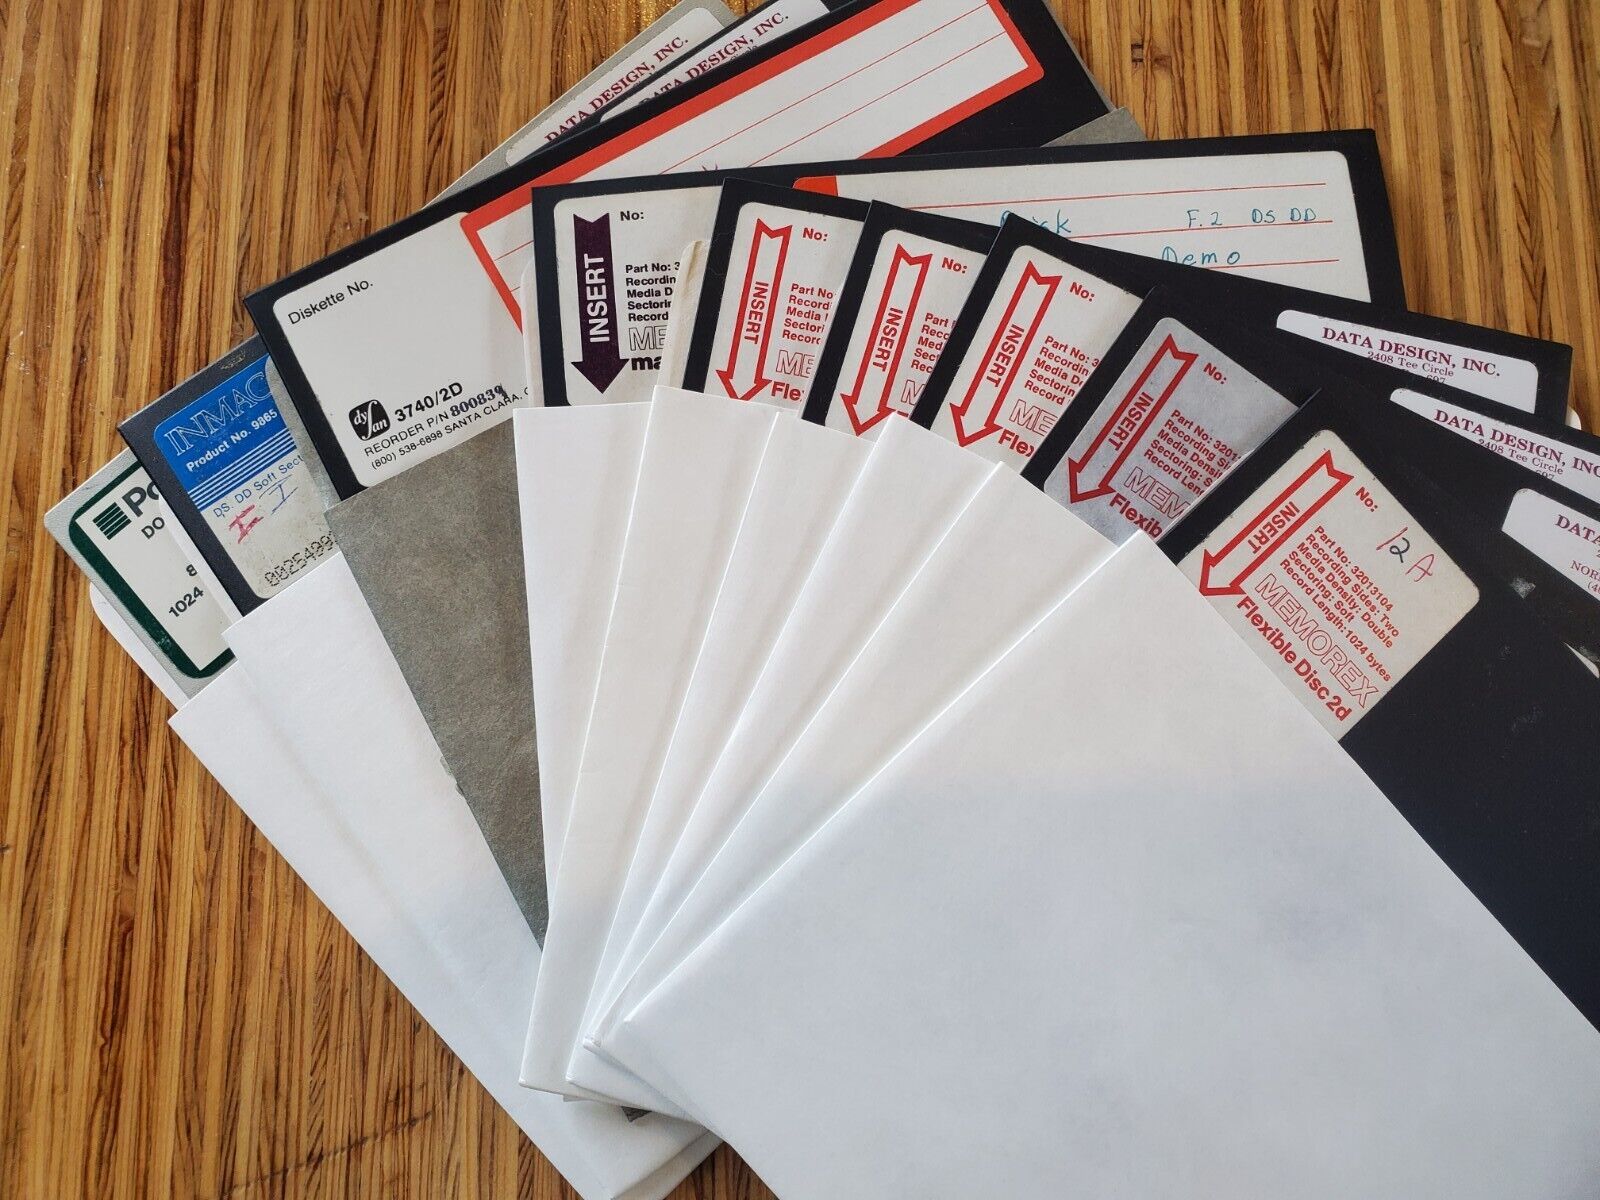 Nine 8 inch floppy disks DSDD (used)